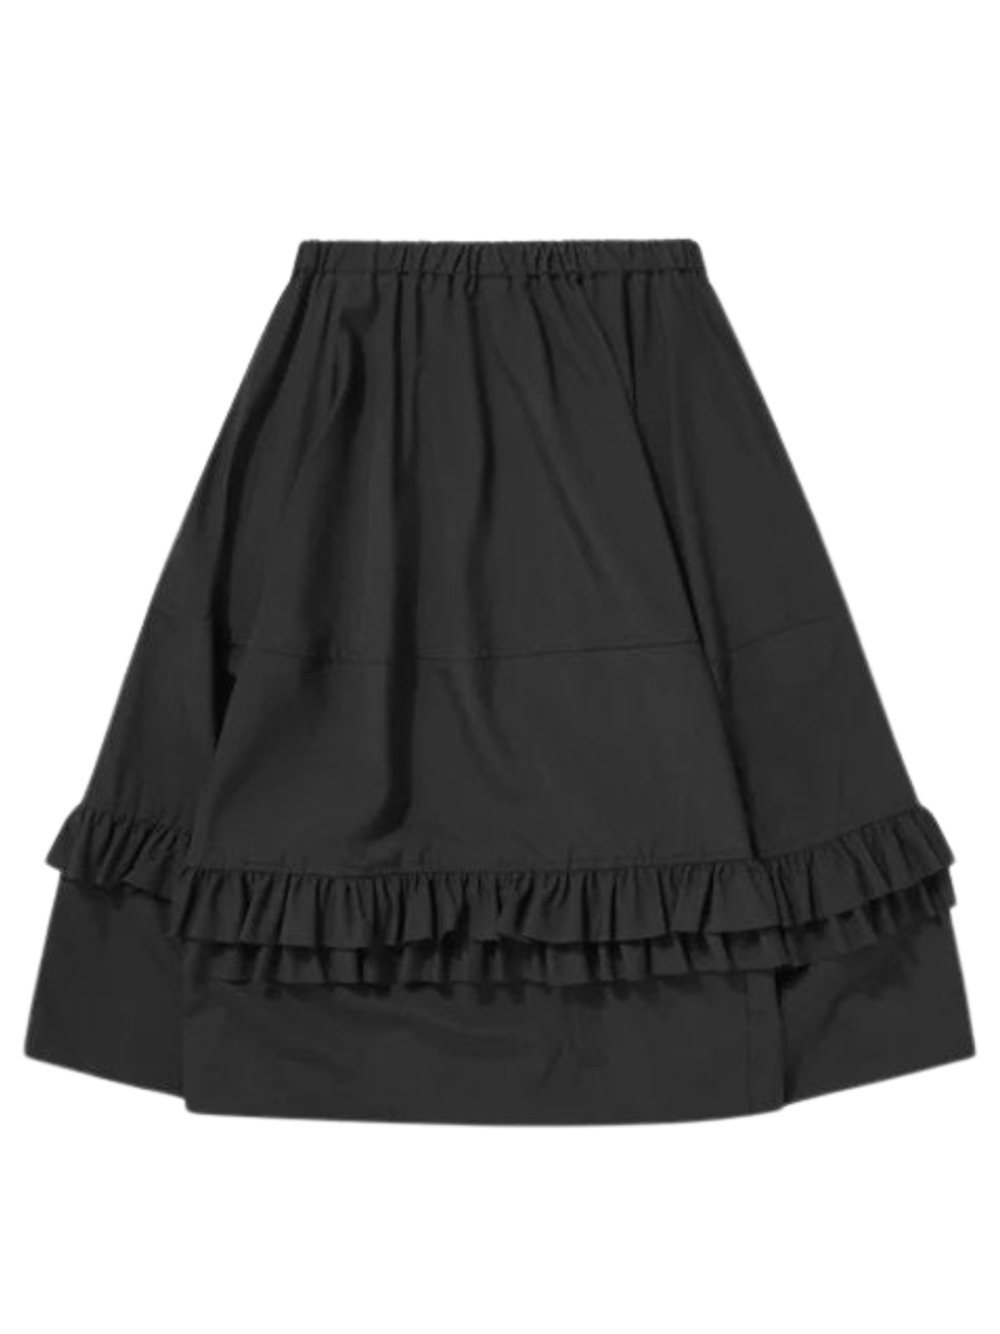 COMME-des-GARCONS-BLACK-Elastic-Ruffled-Skirt-Black-2